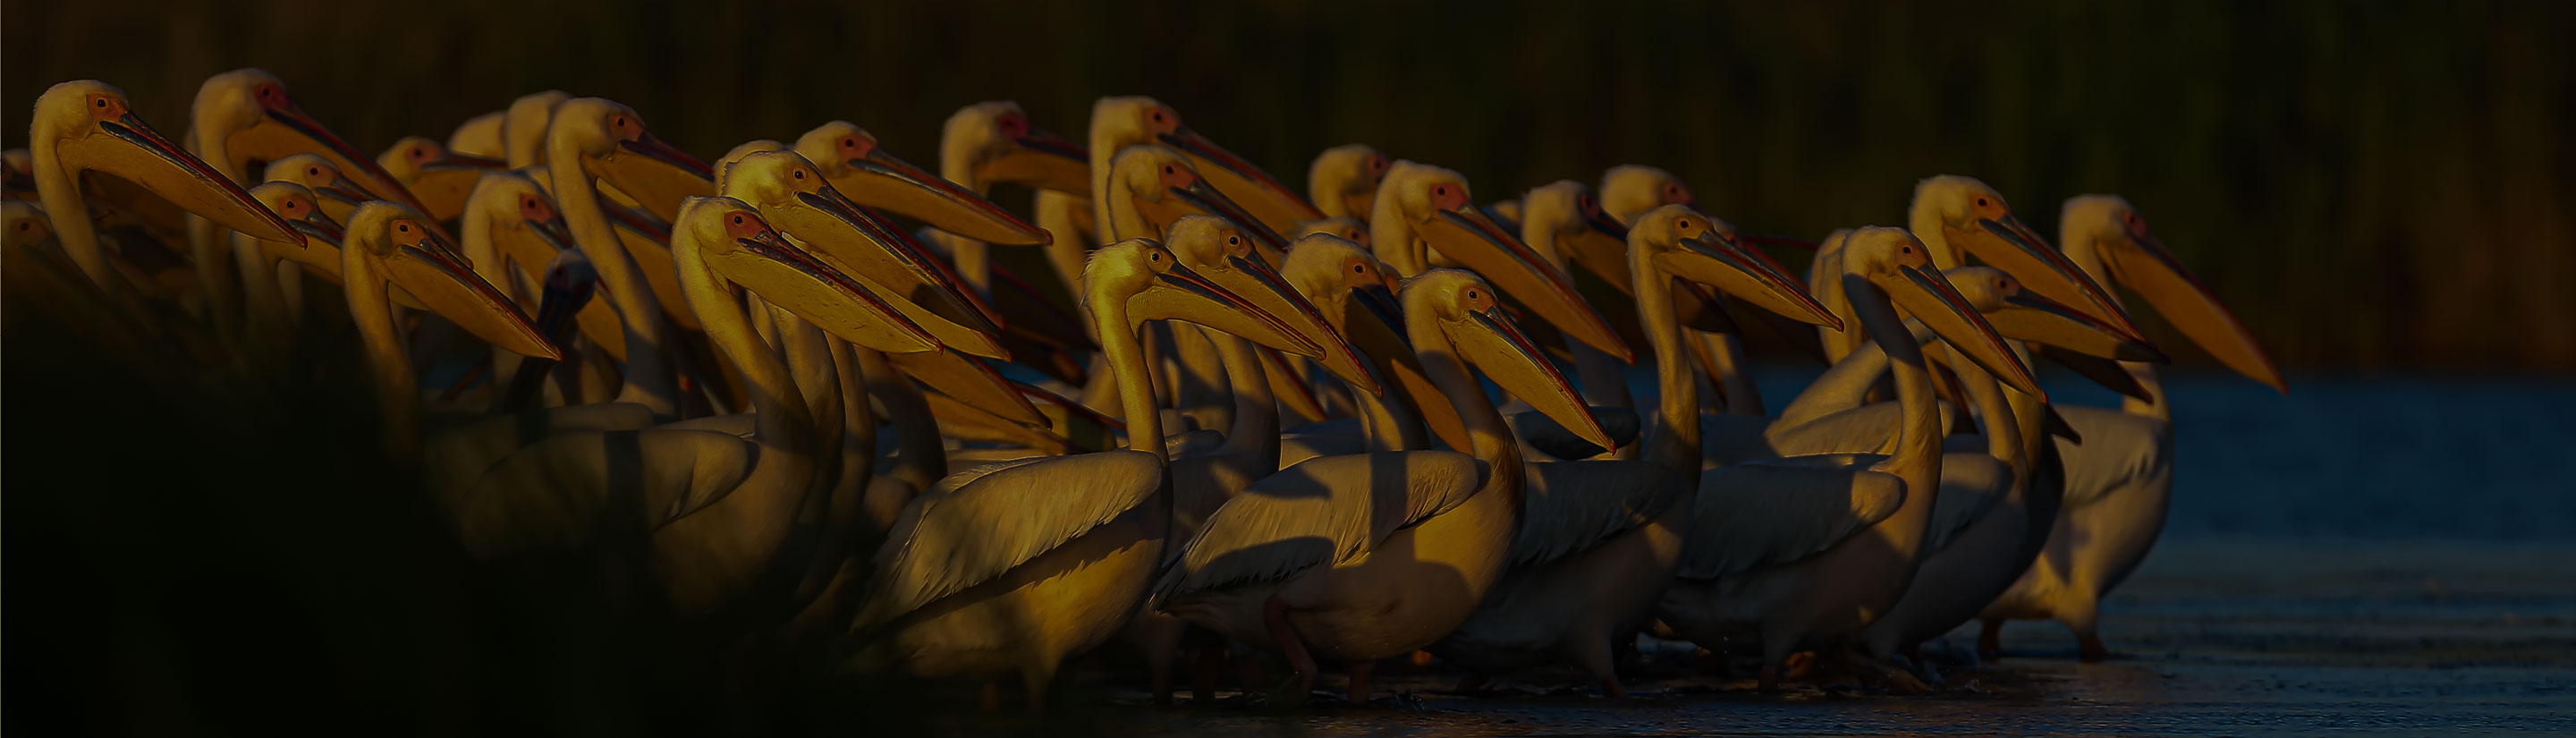 Rumänien Pelikane Kolonie Wasser